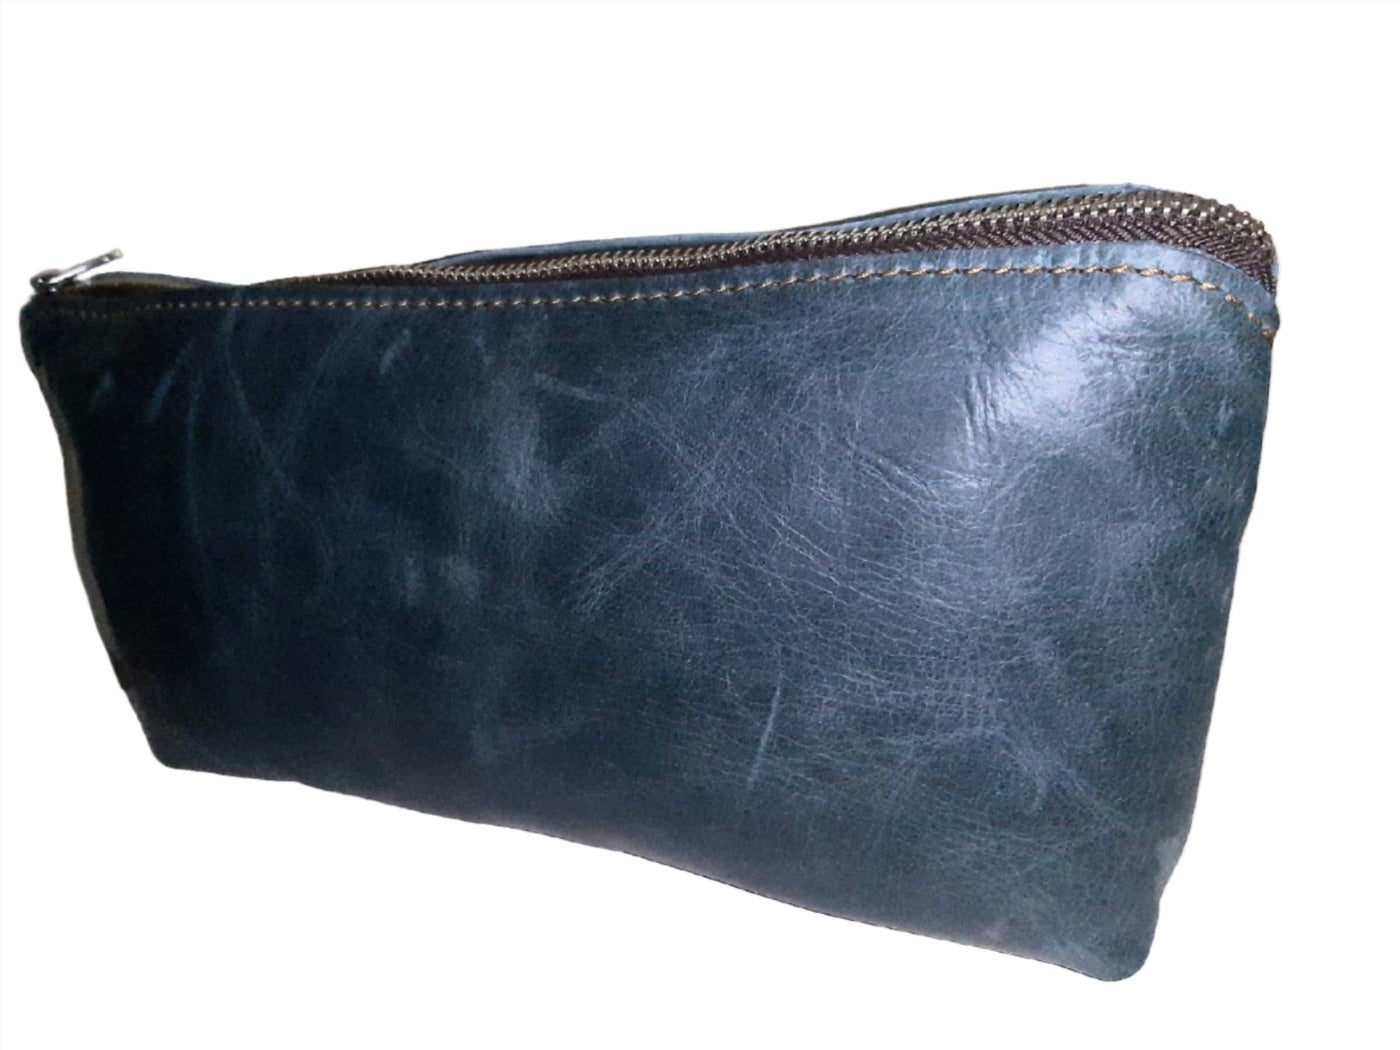 MakeupPurse XL - cape Masai Leather